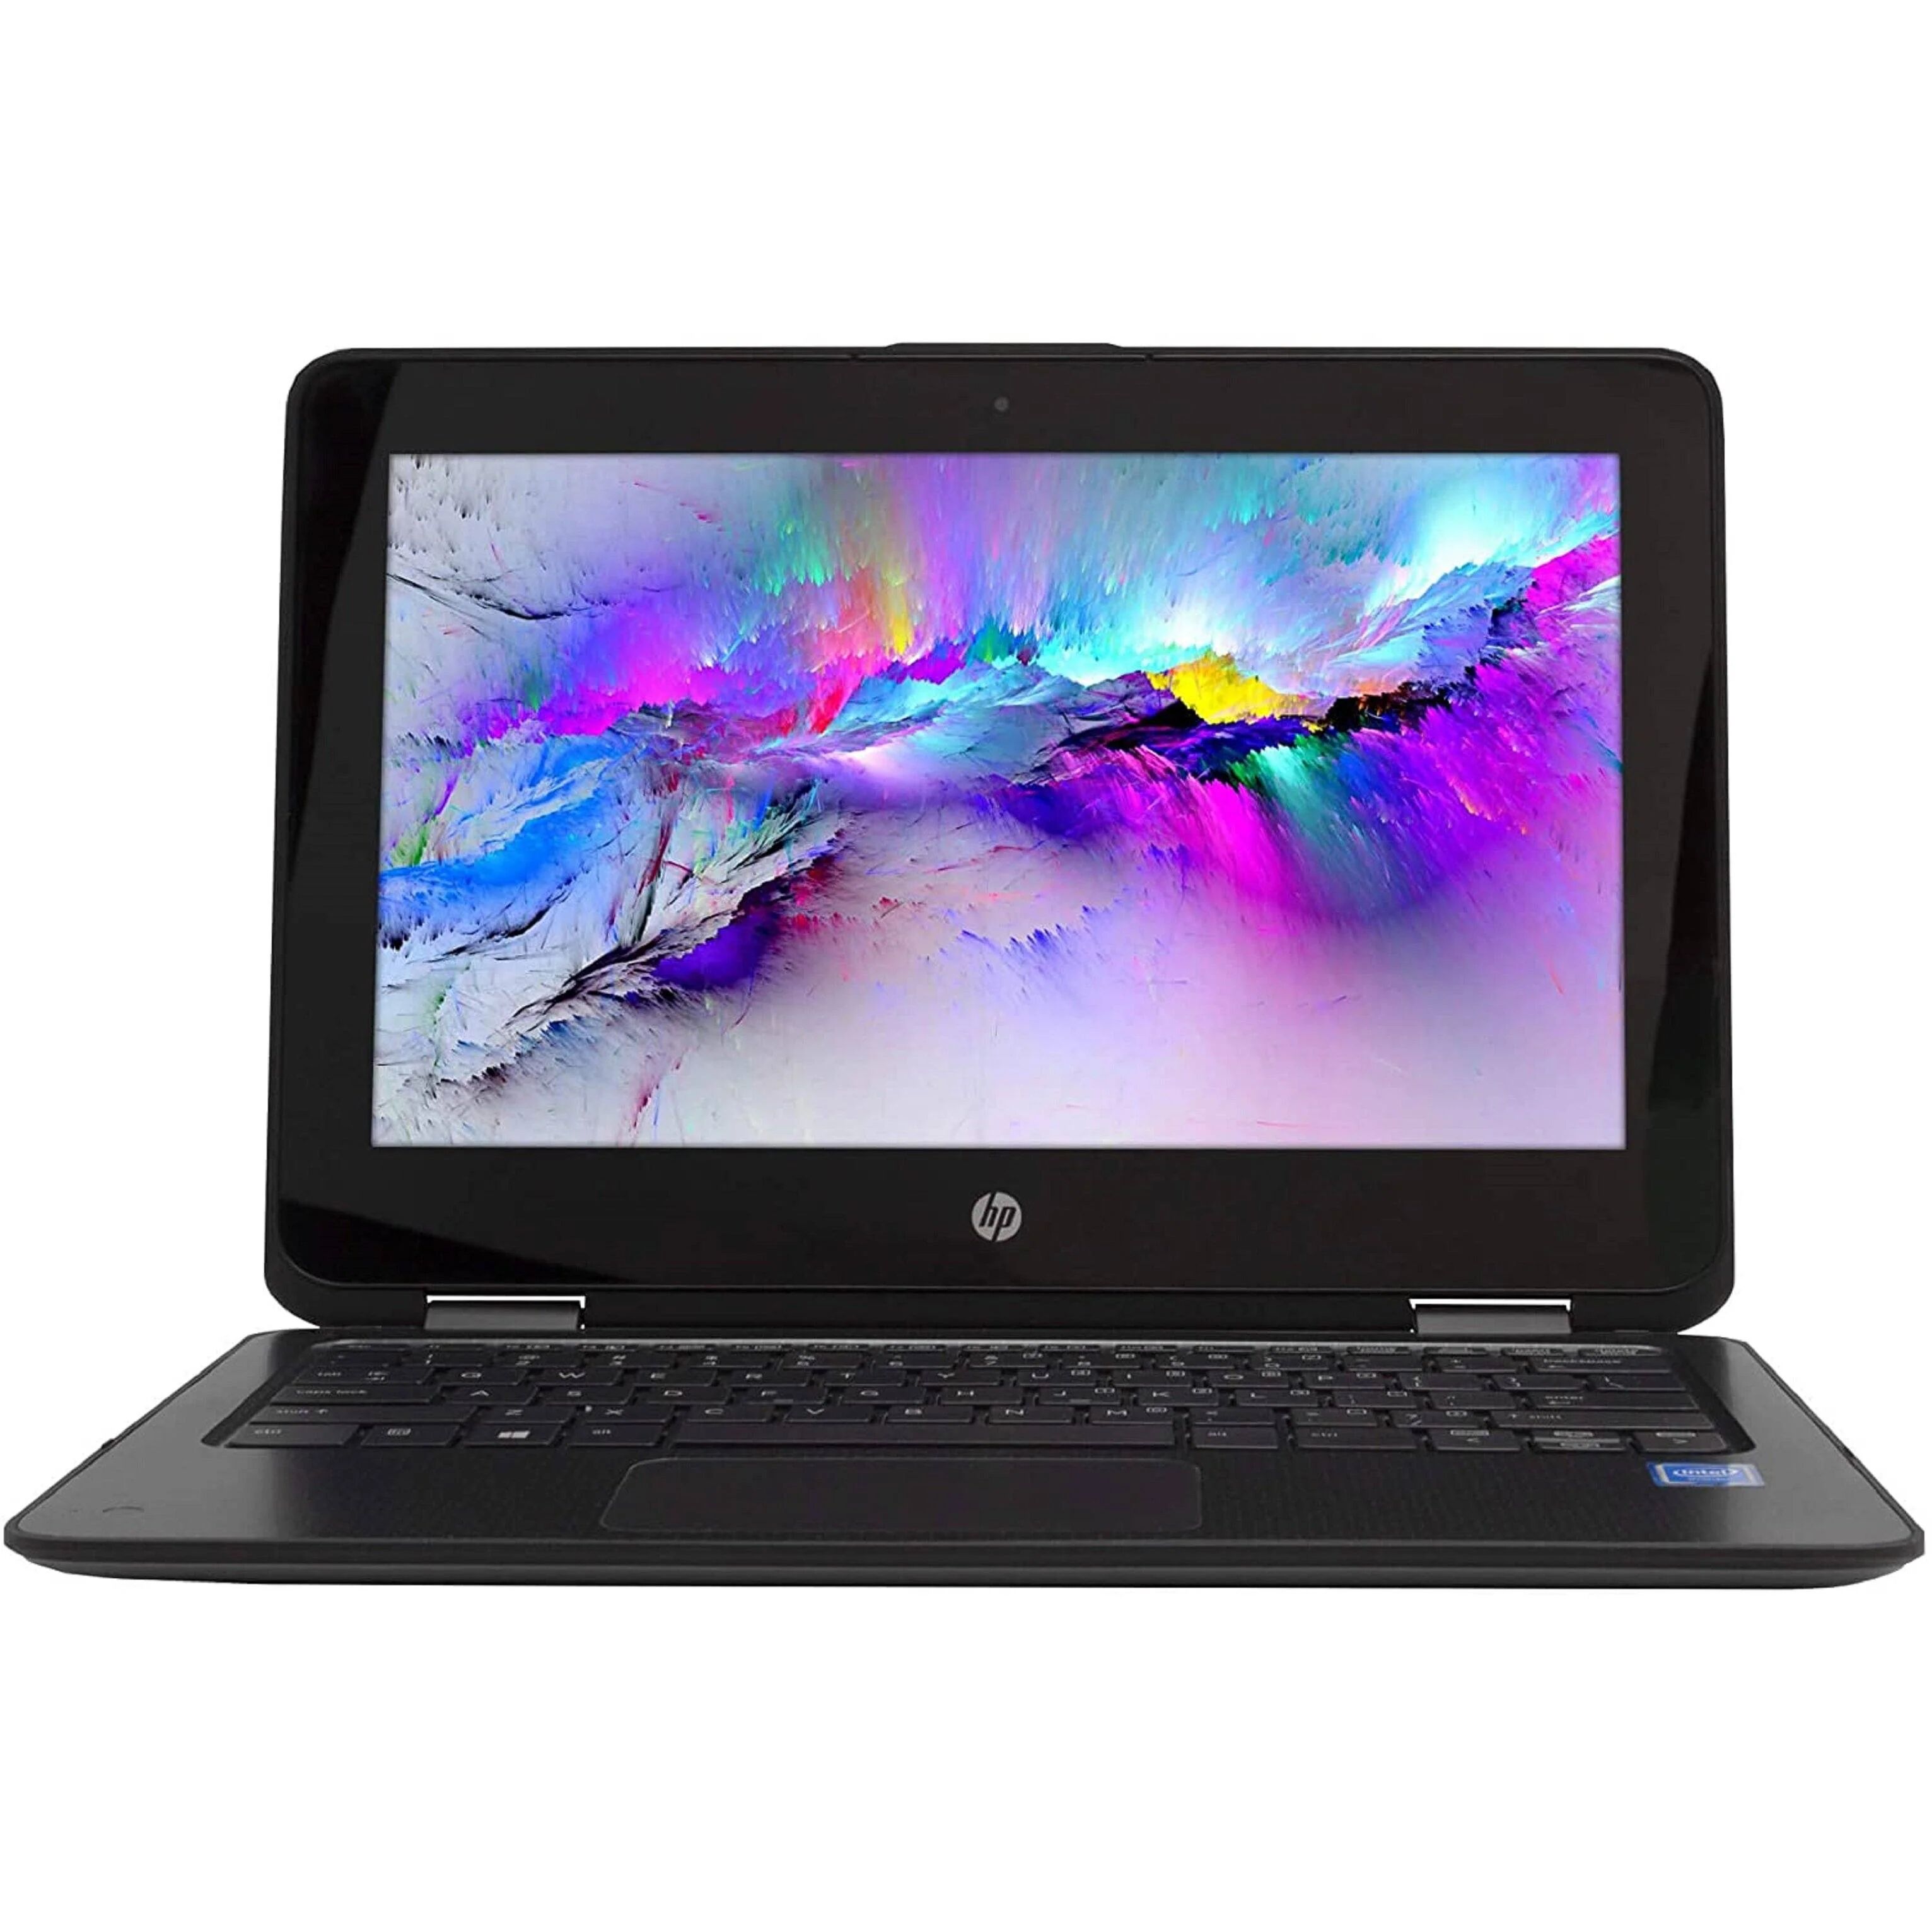 DailySale HP ProBook x360 11 G1 EE N4200 8GB 128GB SSD Touchscreen Convertible Laptop (Refurbished)